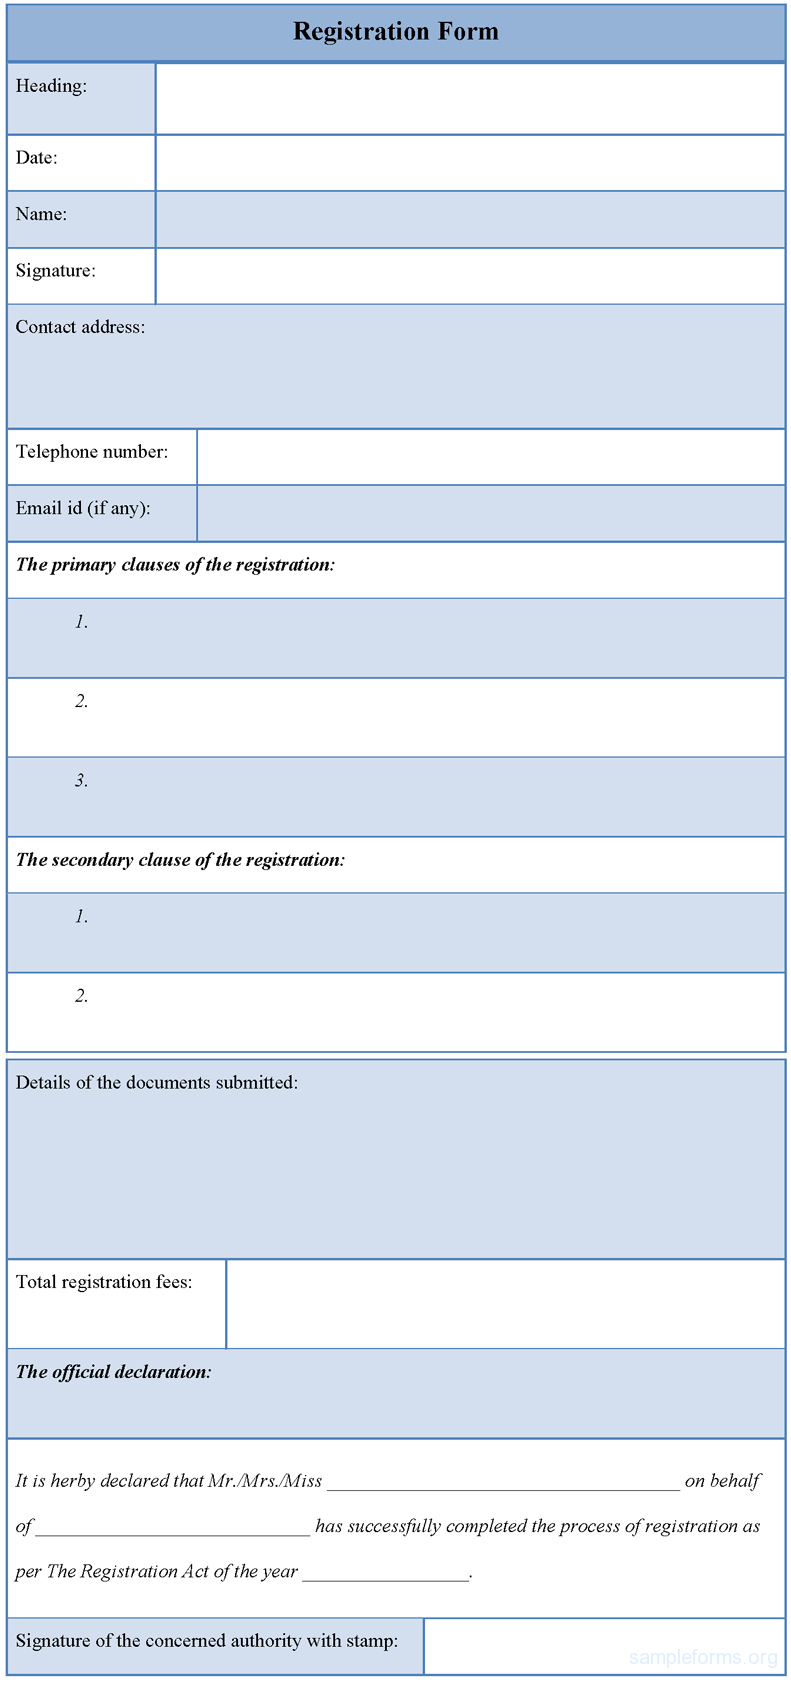 Registration Form Template | E Commercewordpress Regarding Seminar Registration Form Template Word